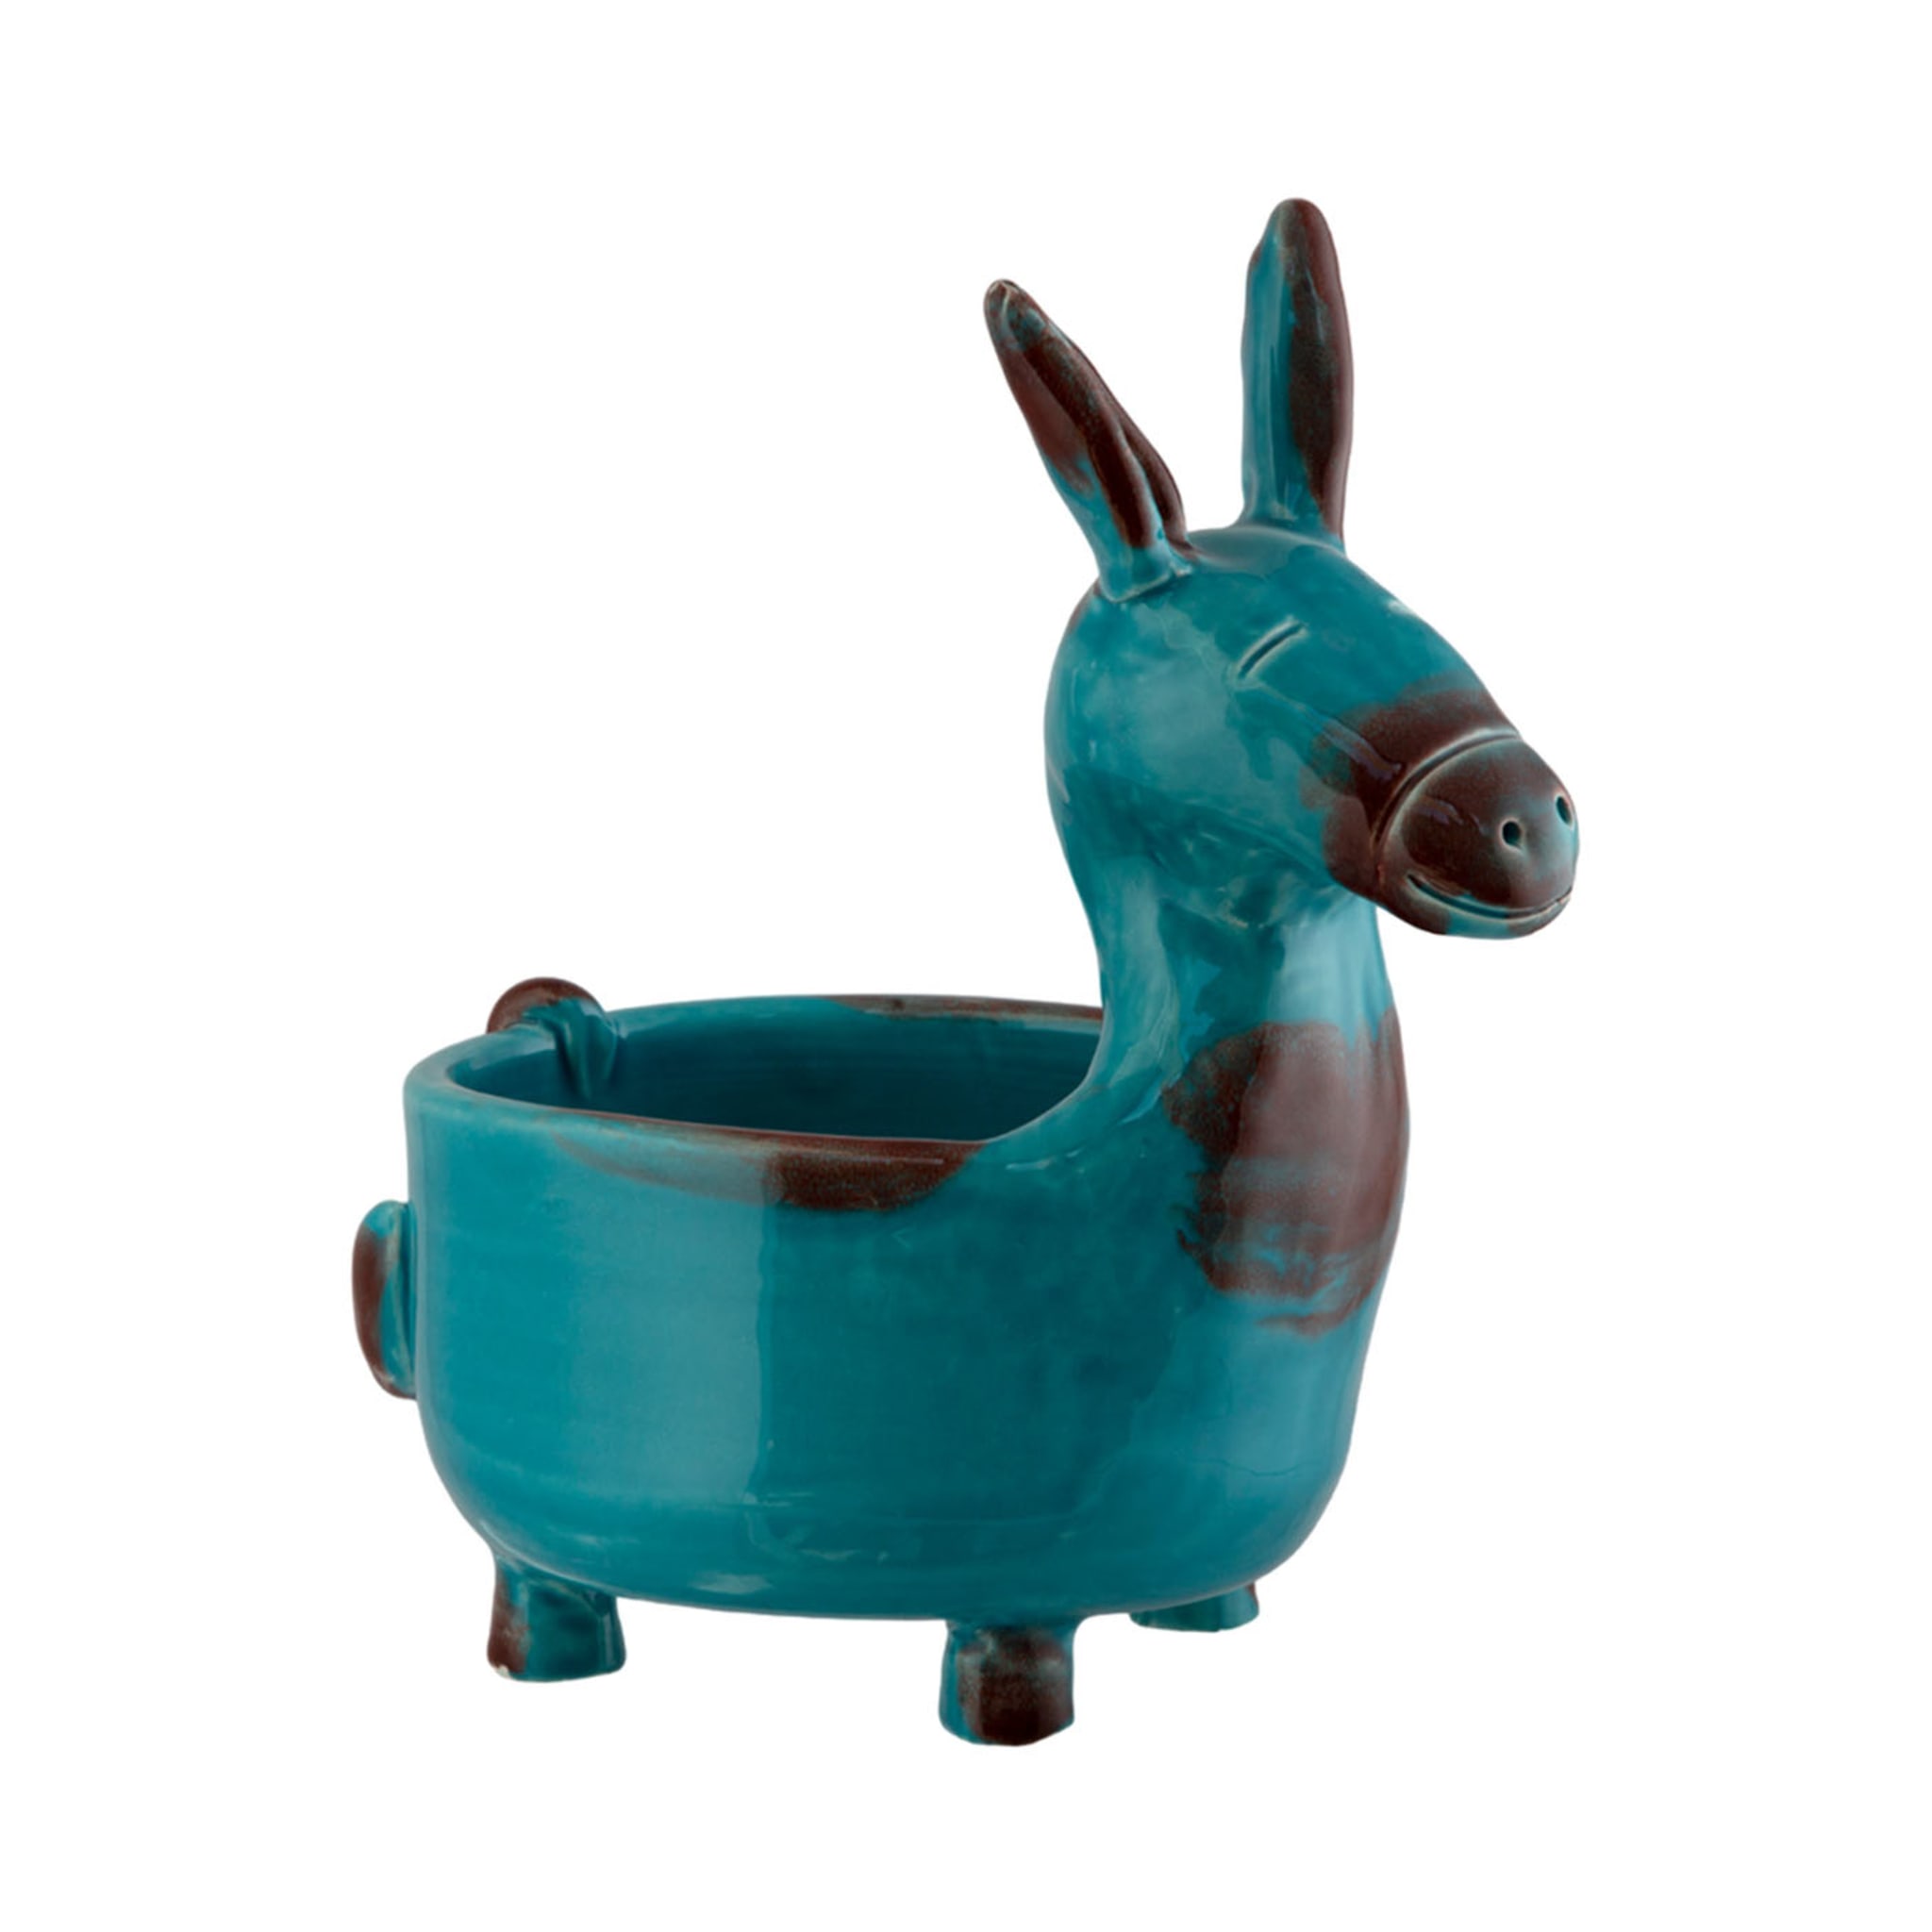 The Little Donkey Vases - Alternative view 1